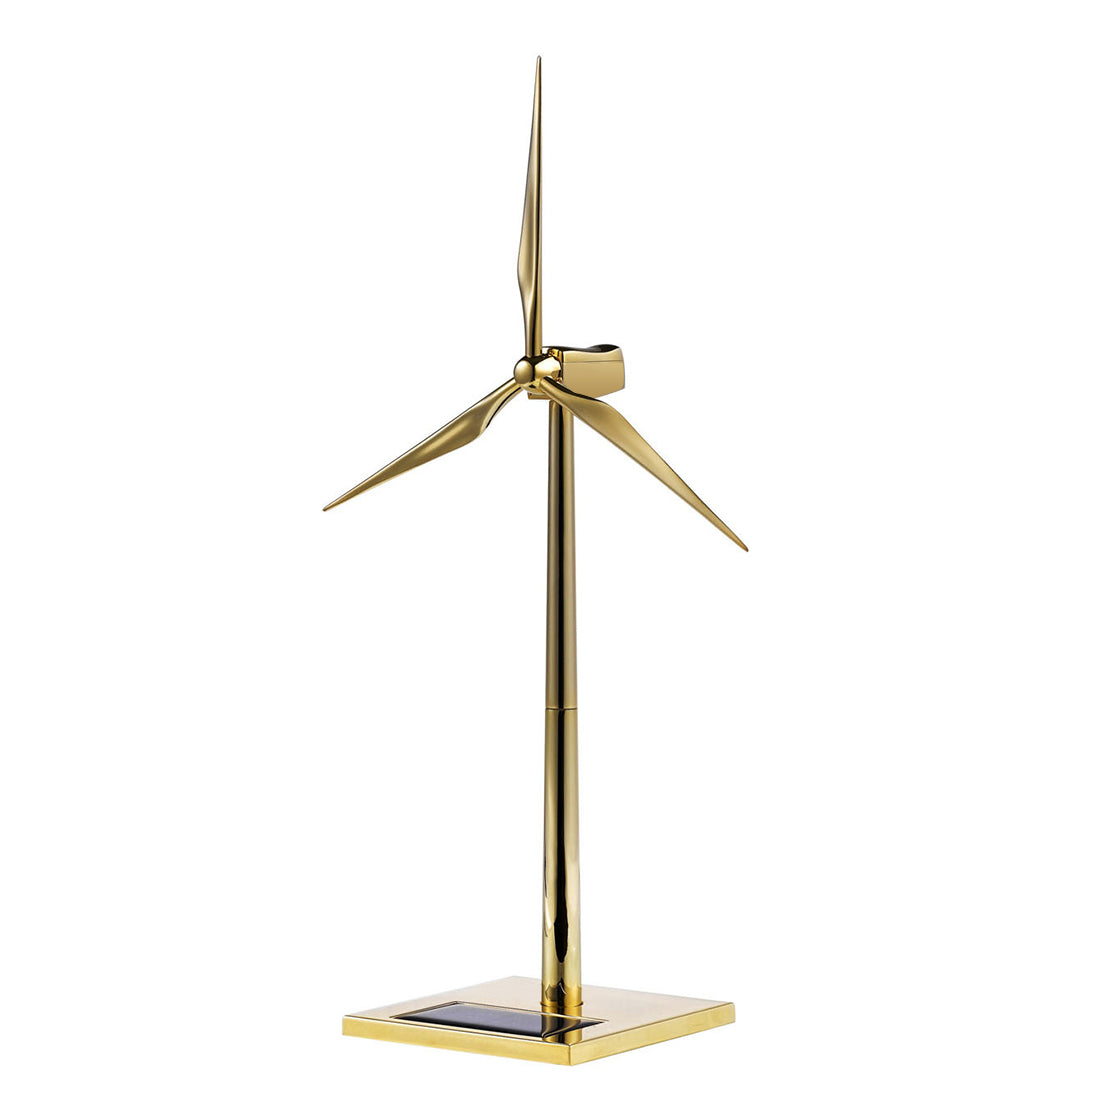 Metalen windgenerator - SolarToys Webshop